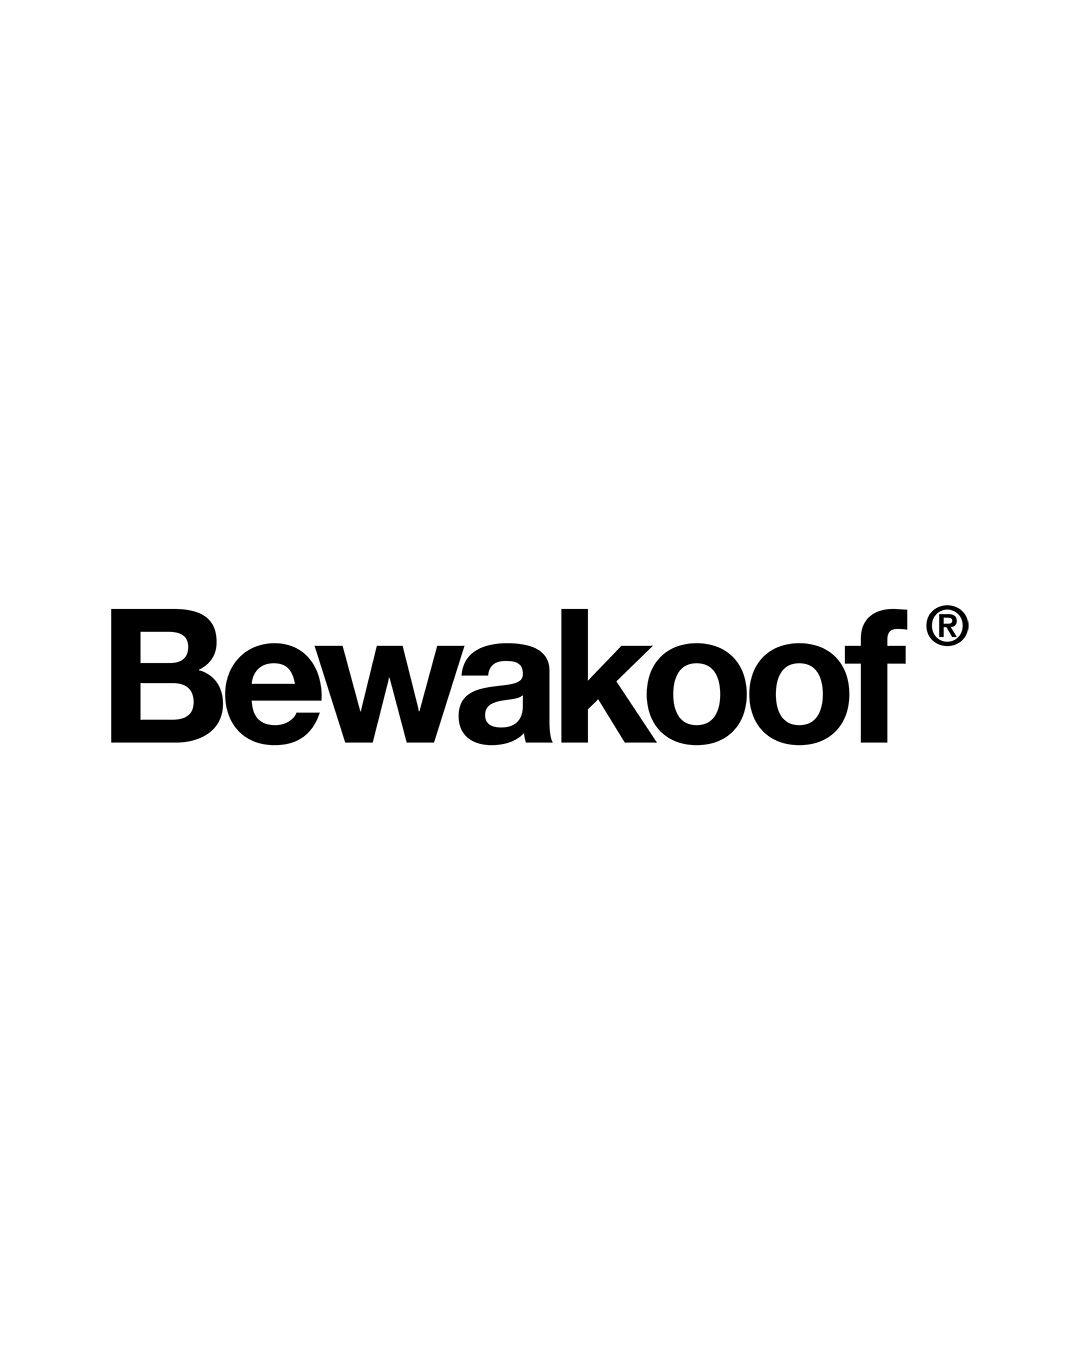 Assam, India - September 12, 2020 : Bewakoof Logo on Phone Screen Stock  Image. Editorial Photo - Image of selling, screen: 197240986